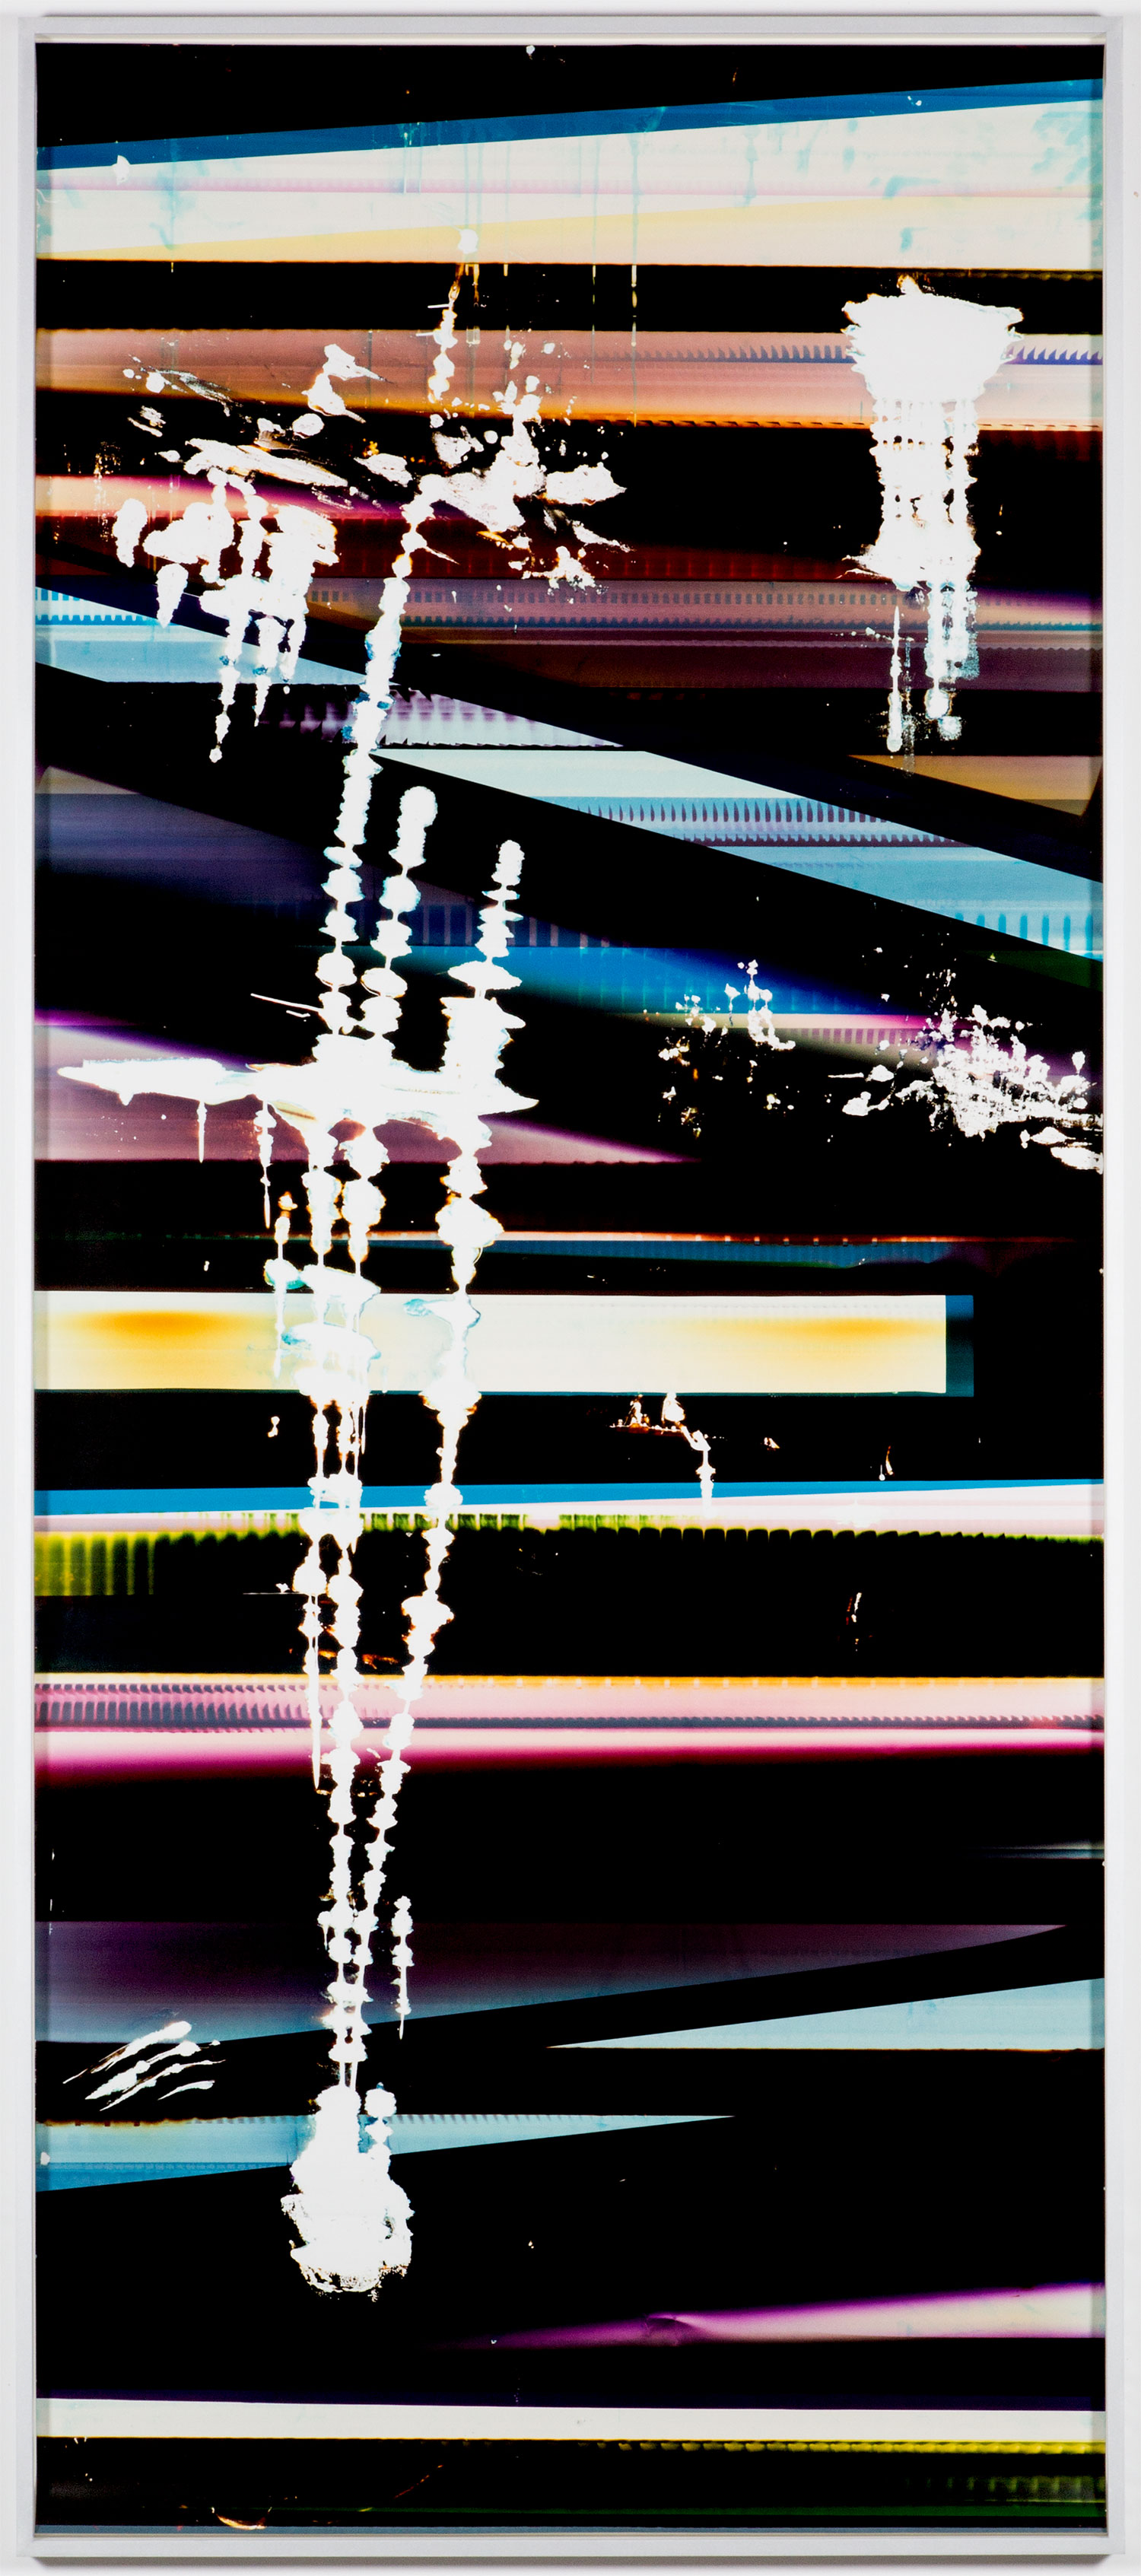   Cross-Contaminated RA4 Contact Print (CYM/Six Magnet: Los Angeles, California, January 27, 2014; Fuji Color Crystal Archive Super Type C, Em. No. 101-006; Kodak Ektacolor RA Bleach-Fix and Replenisher, Cat. No. 847 1484; Kreonite KM IV 5225 RA4 Col